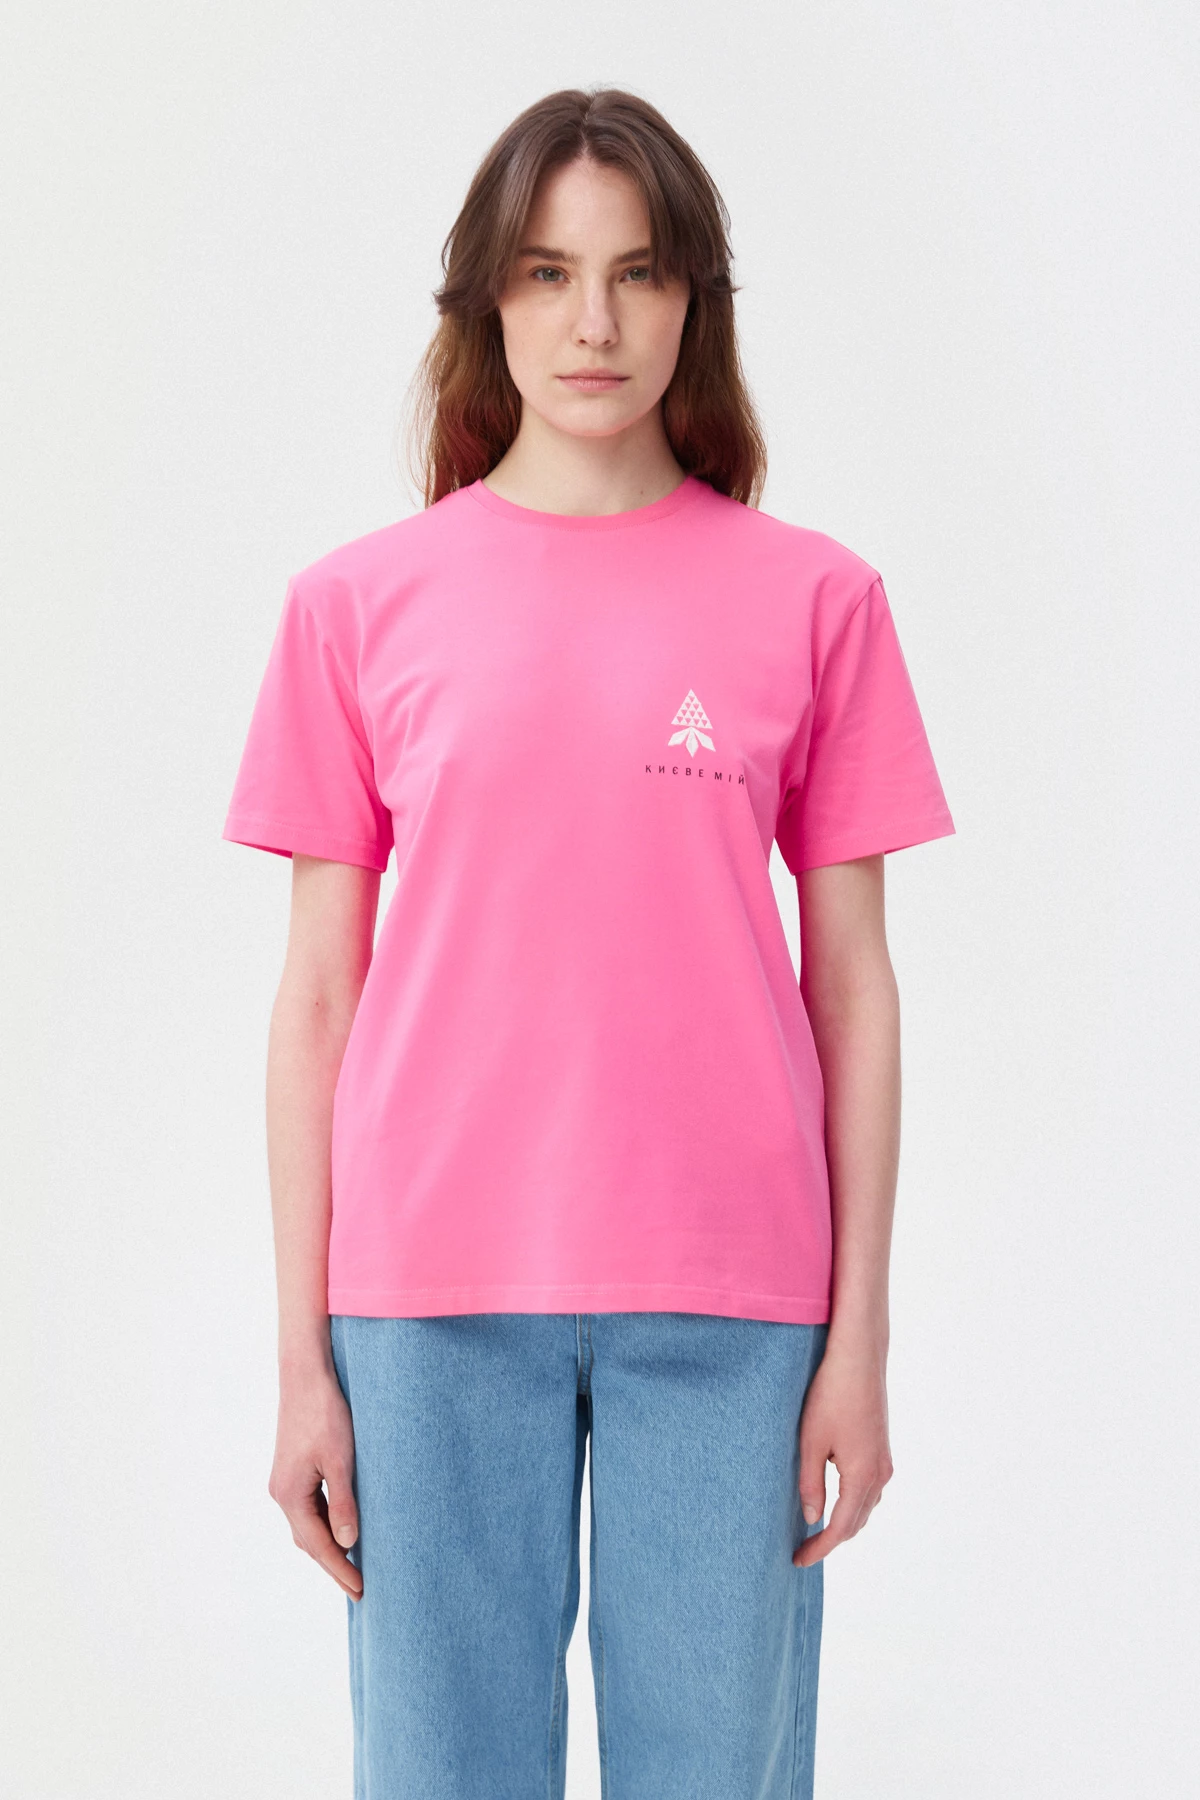 Розовая футболка "Каштан" из хлопка, фото 1